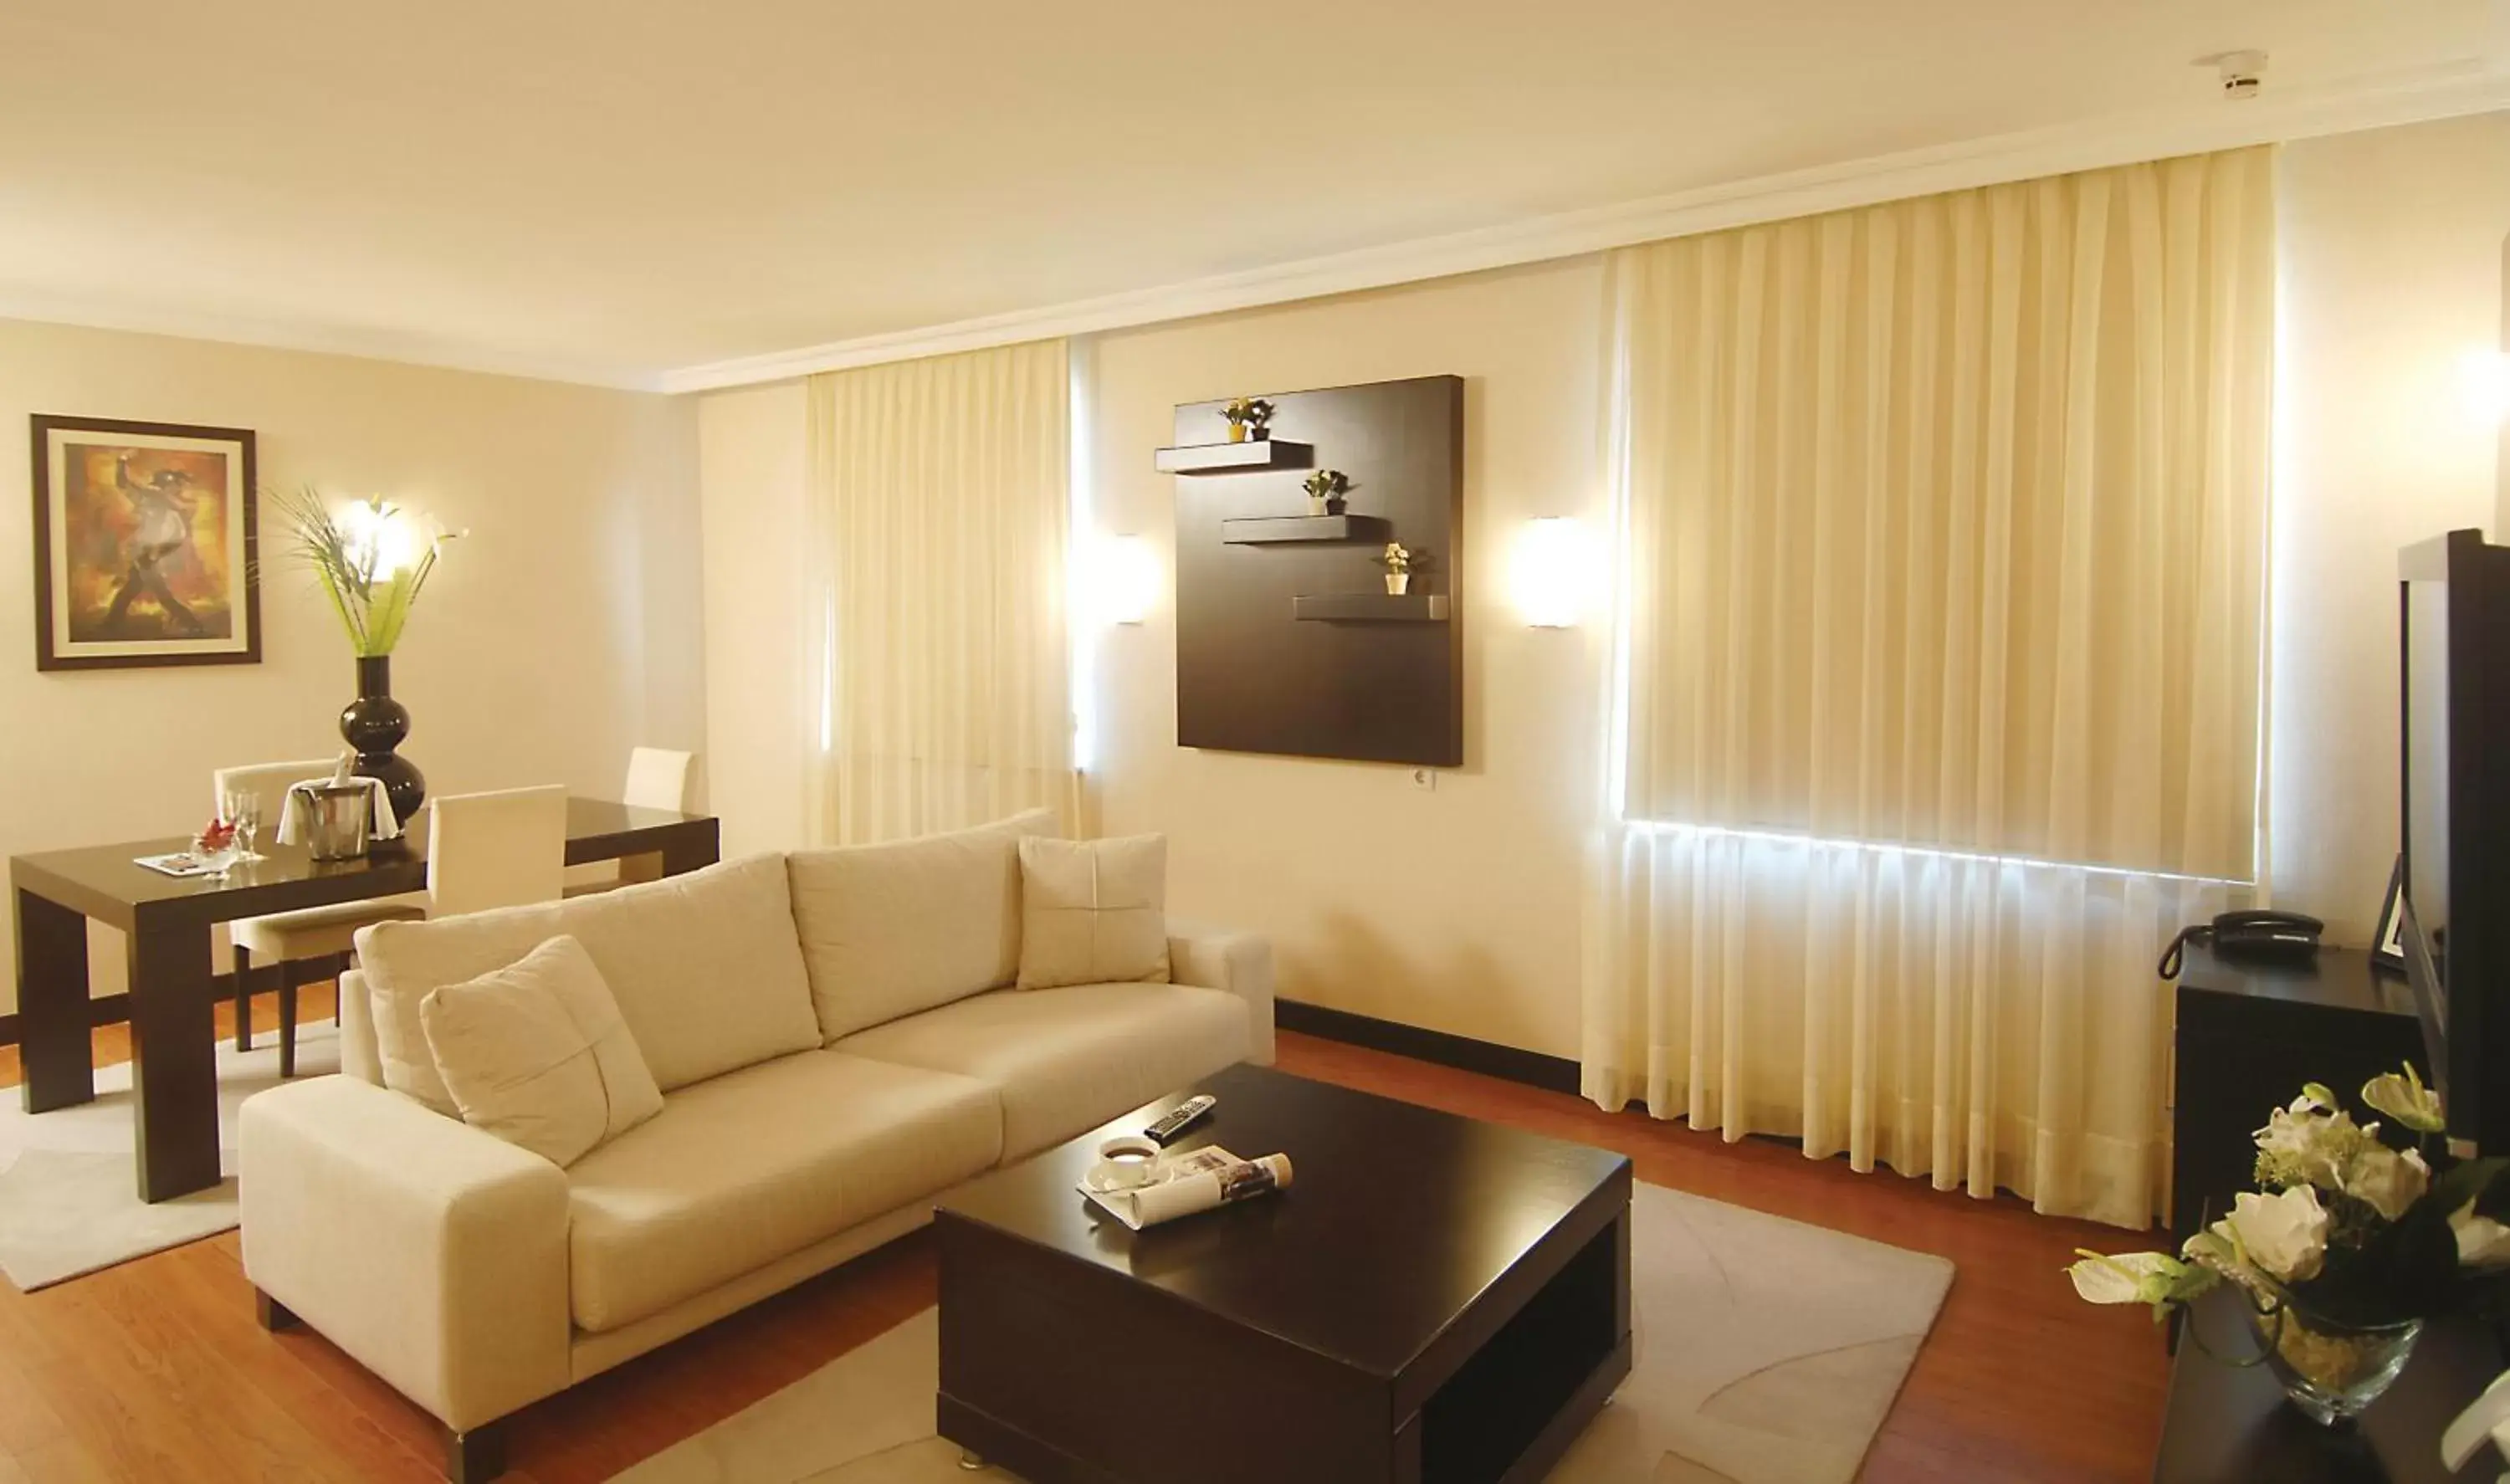 TV and multimedia, Seating Area in Eresin Hotels Topkapi